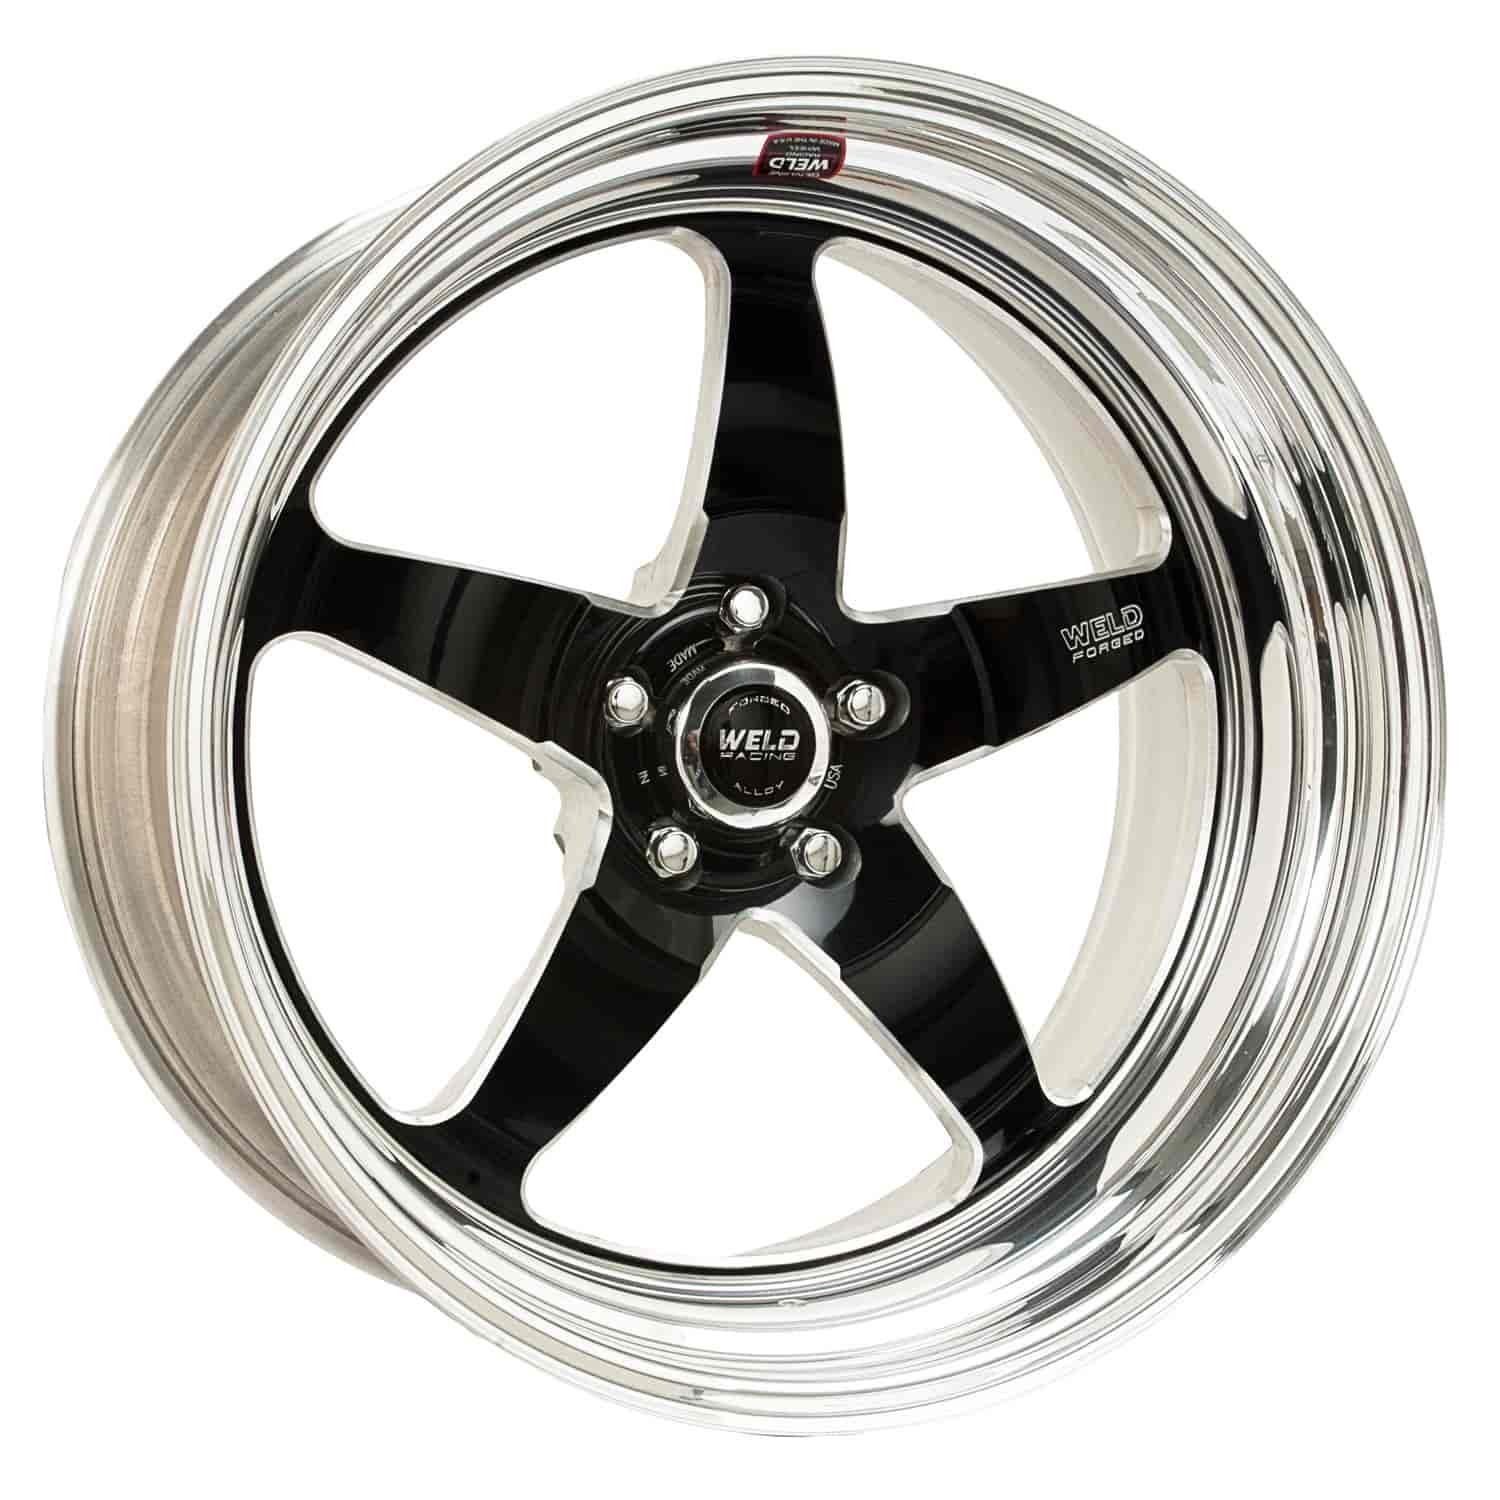 RT-S Series Wheel Size: 18" x 10" Bolt Circle: 5 x 4.5" Rear Spacing: 7.10" Black Offset: +40.64mm